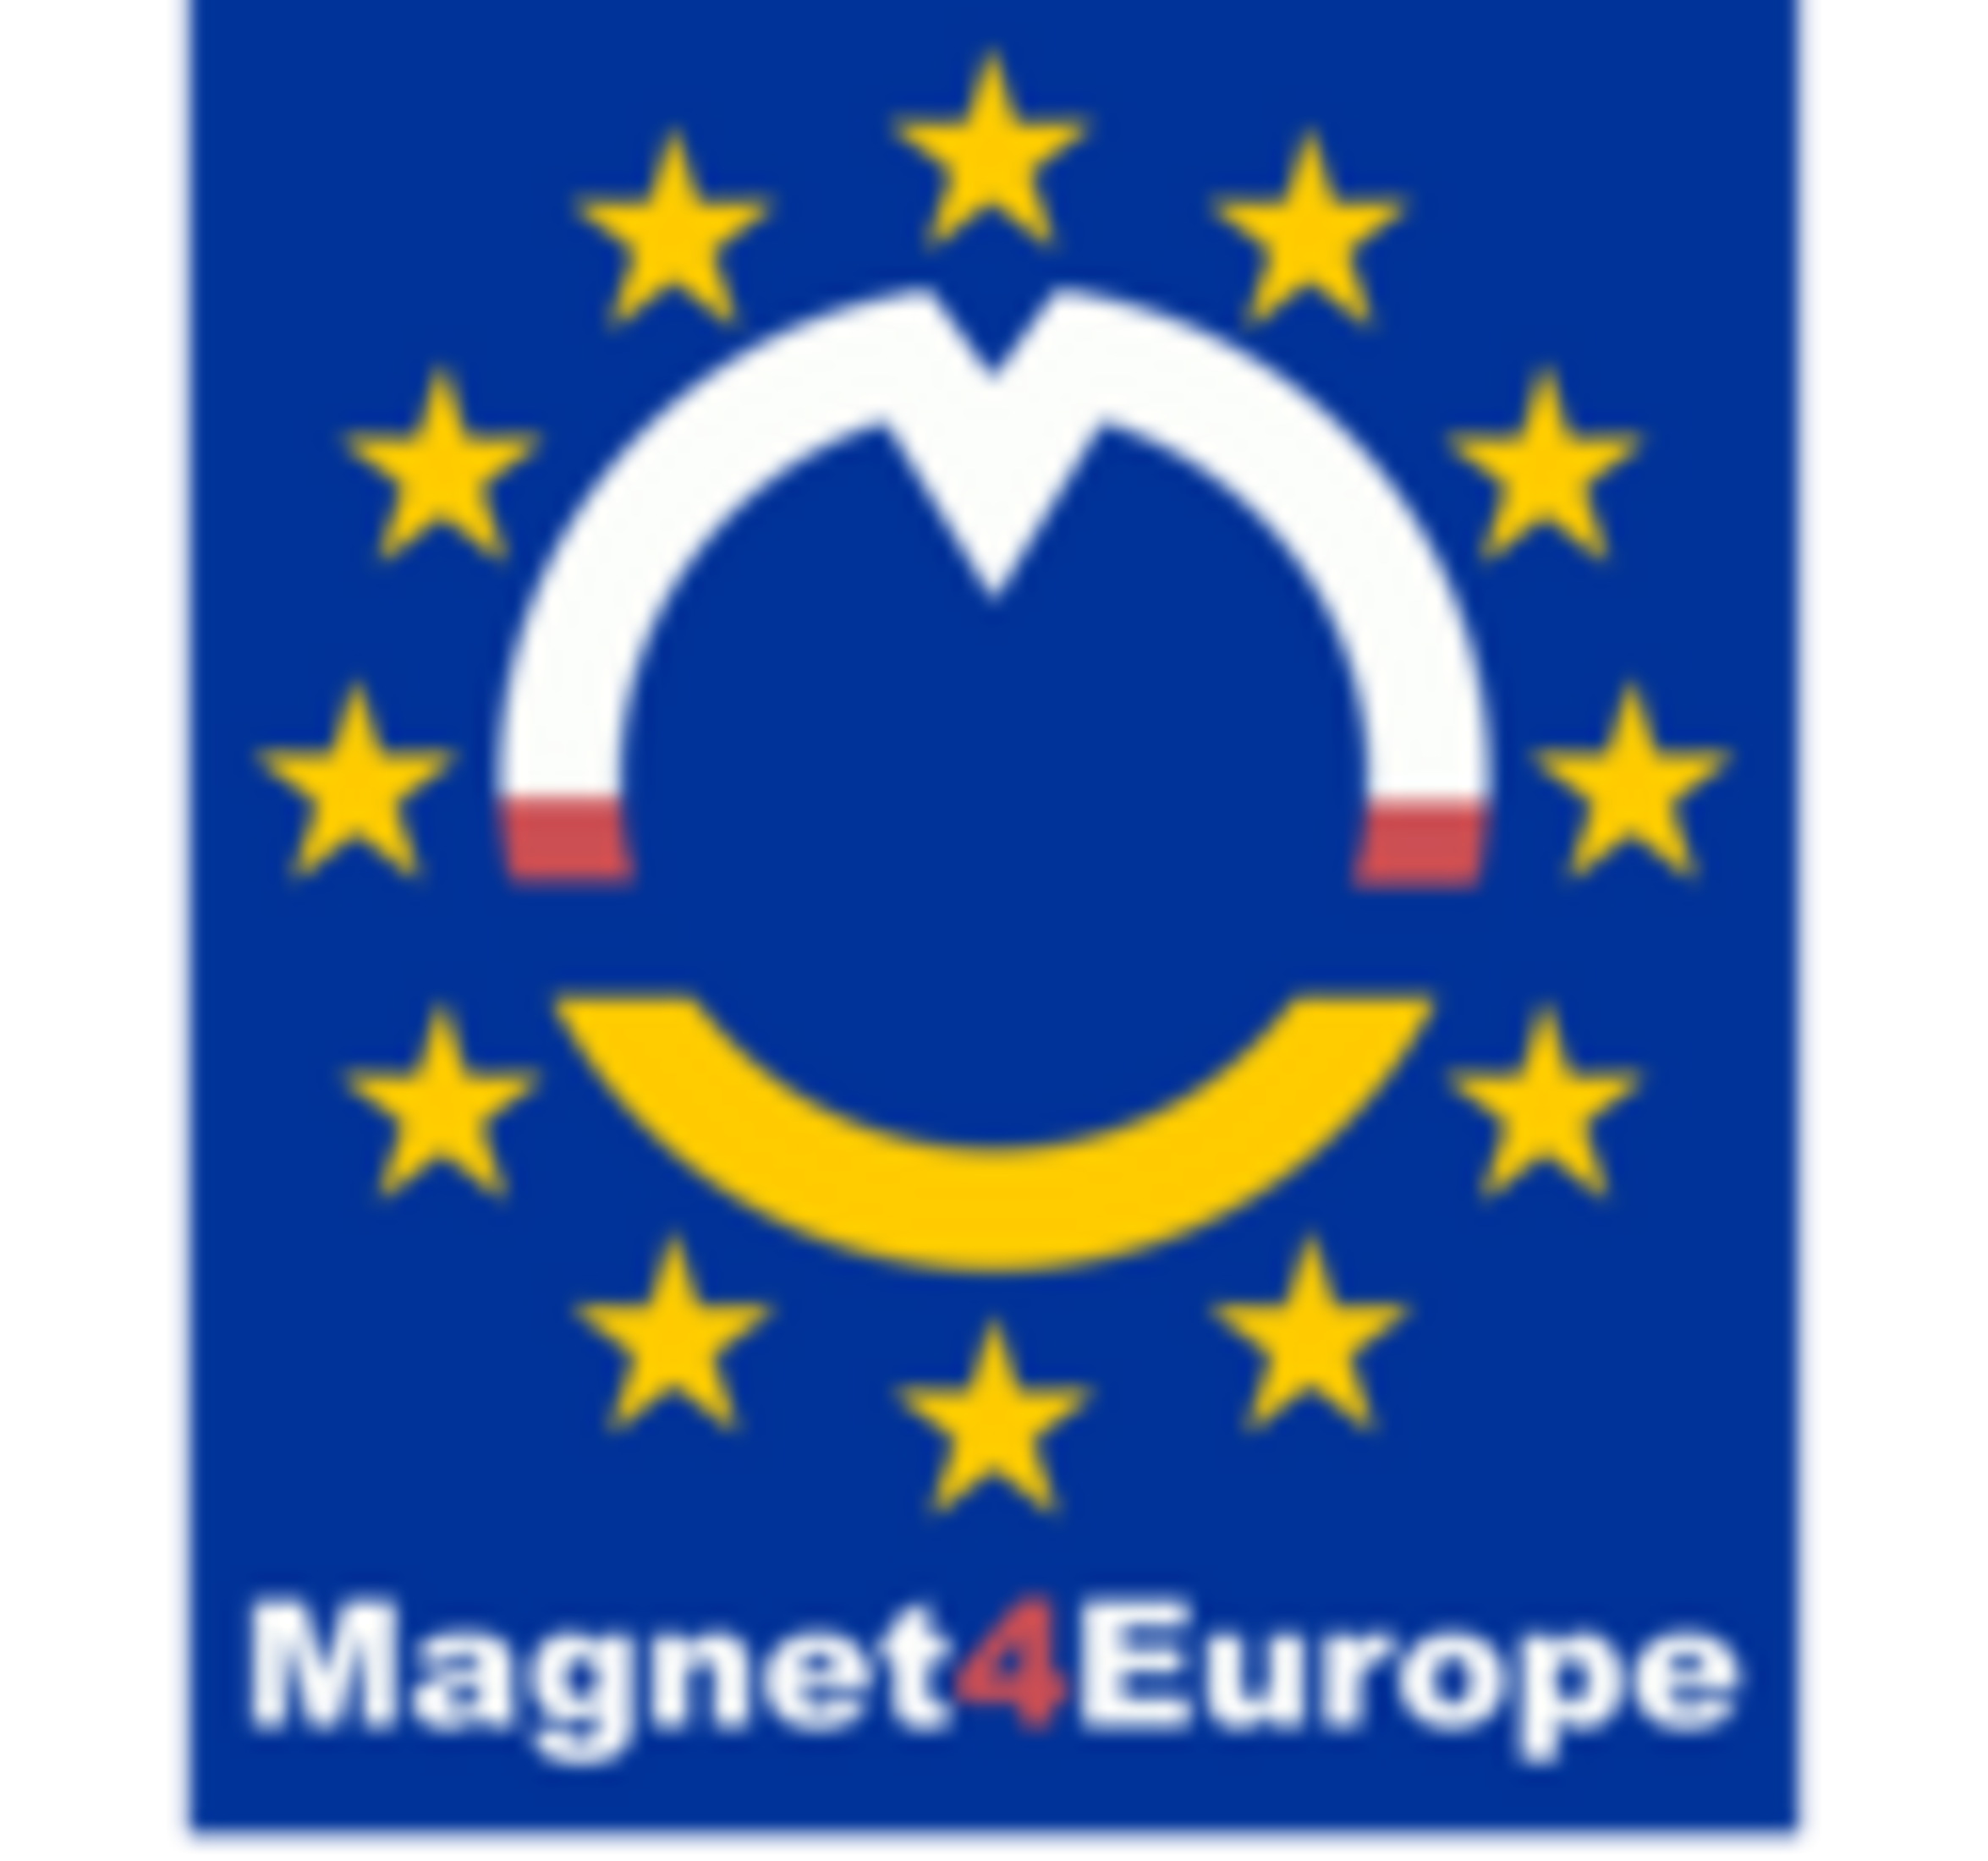 Visual Magnet4Europe